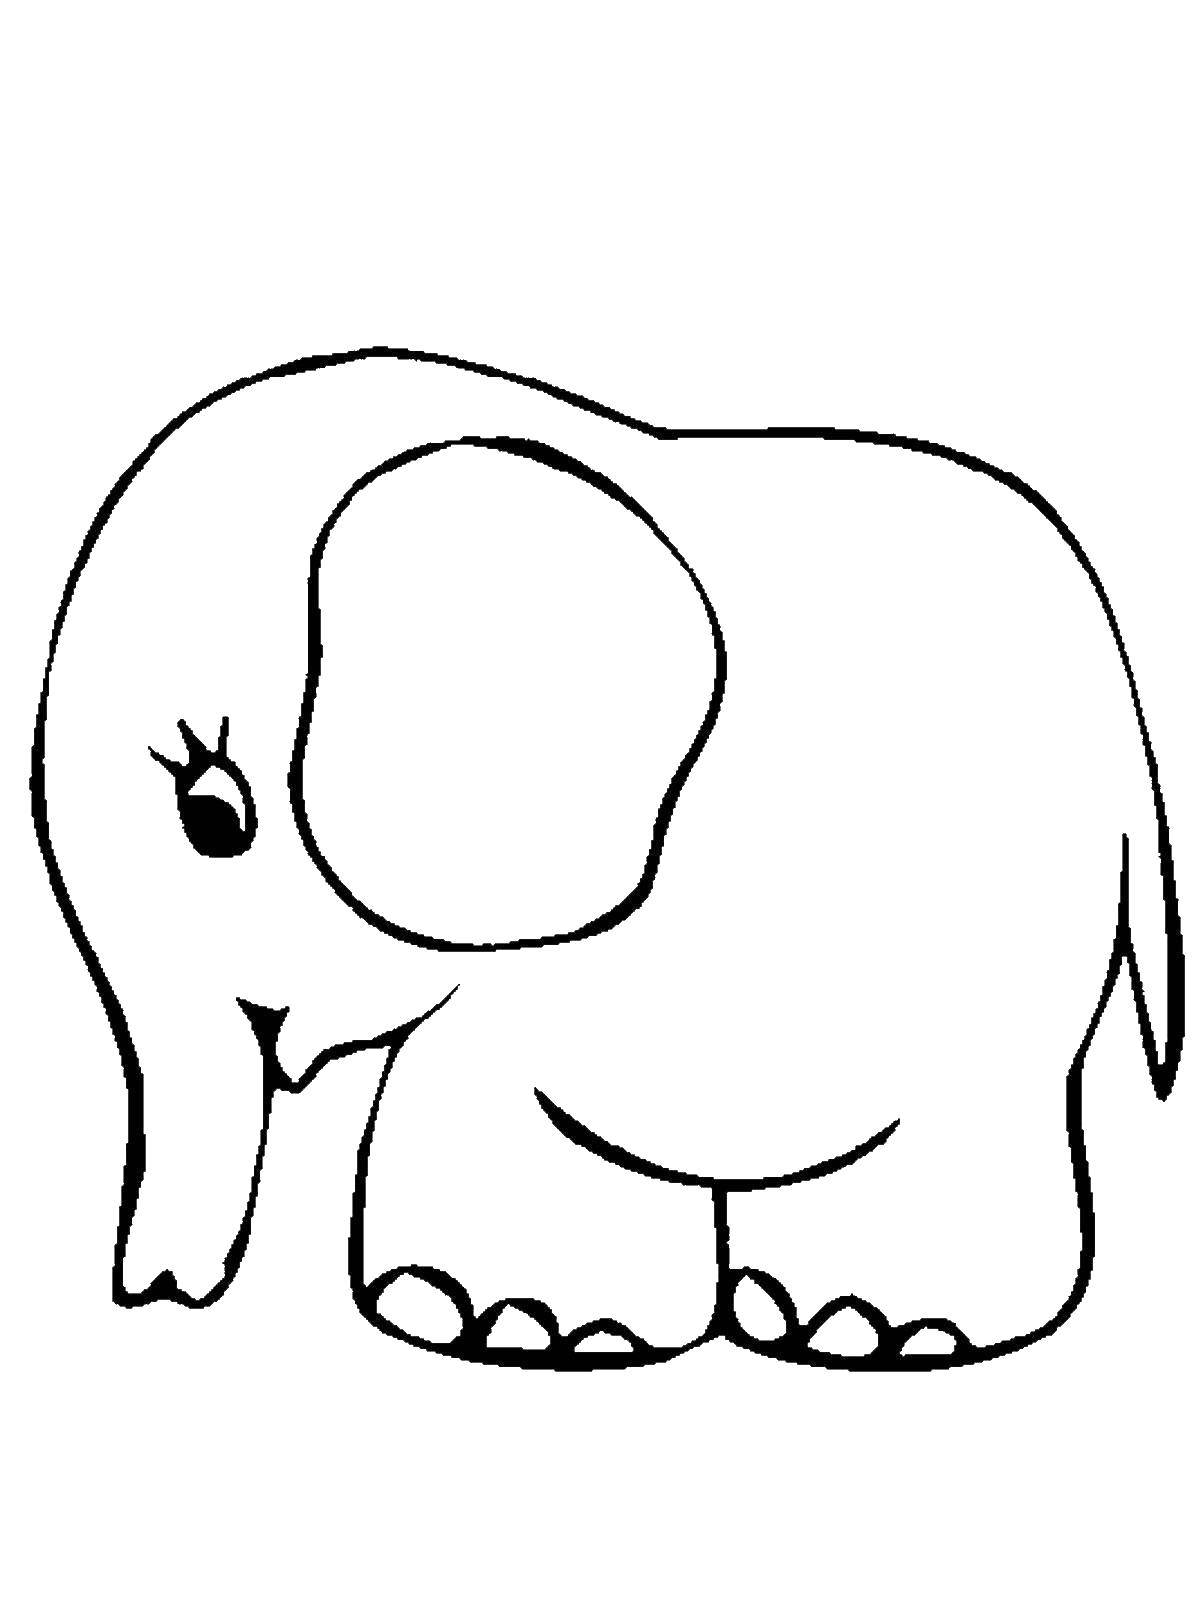 Coloring Elephant. Category Animals. Tags:  Elephant.